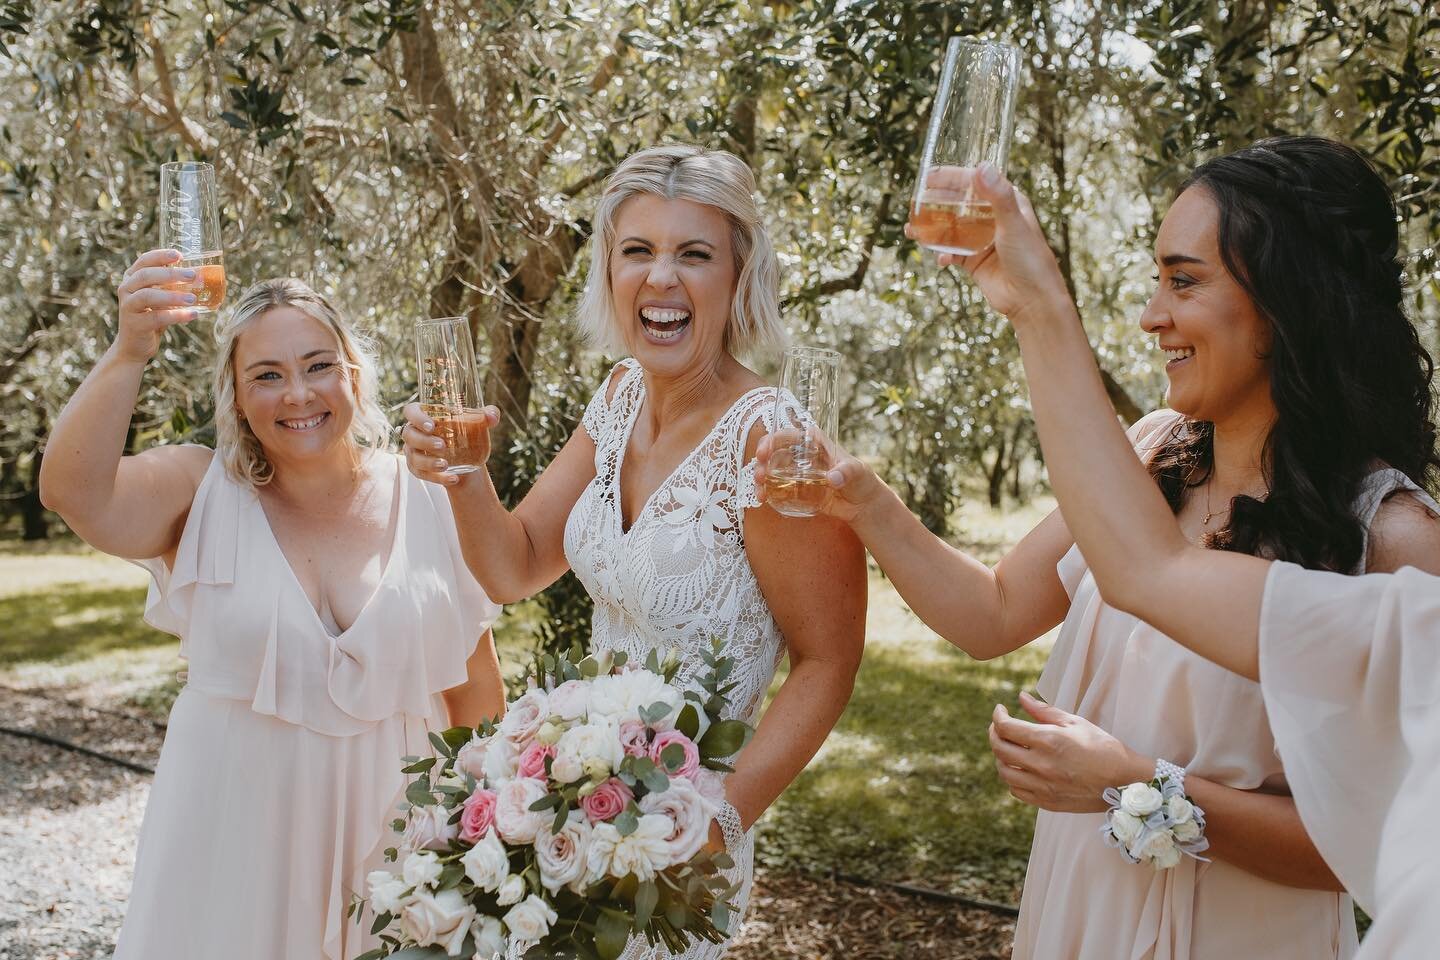 Kristen with her girls ❤️ 
-
@bracu.estate 
#bracu #aucklandweddings #nzphotographer #weddingday #lovers #ohwowyes #mrs #bride #johnzimmermancouture